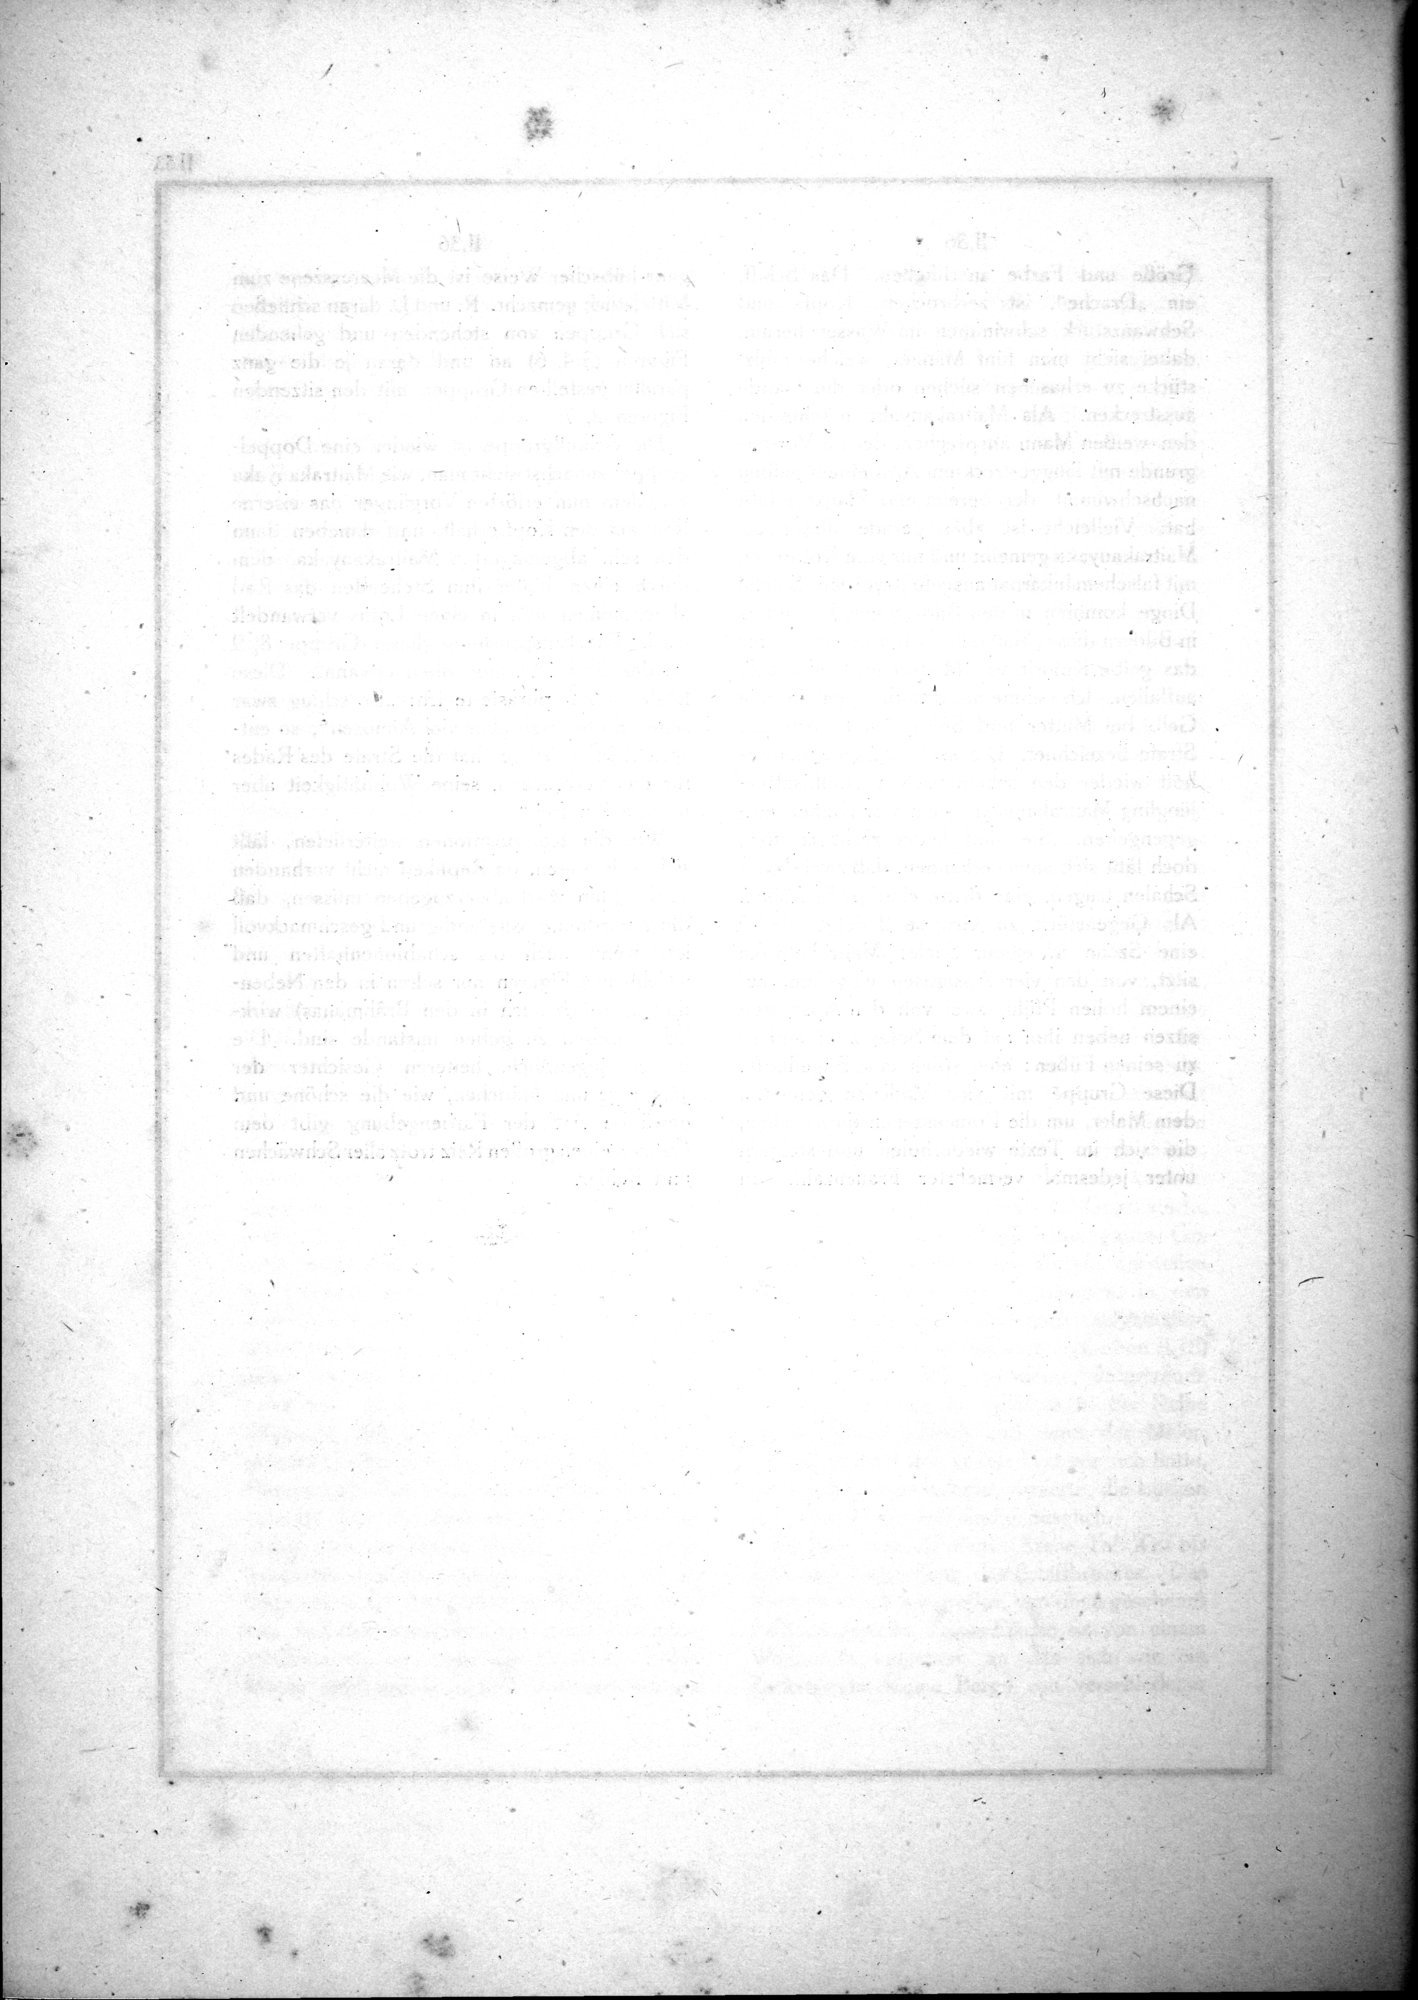 Alt-Kutscha : vol.1 / Page 164 (Grayscale High Resolution Image)